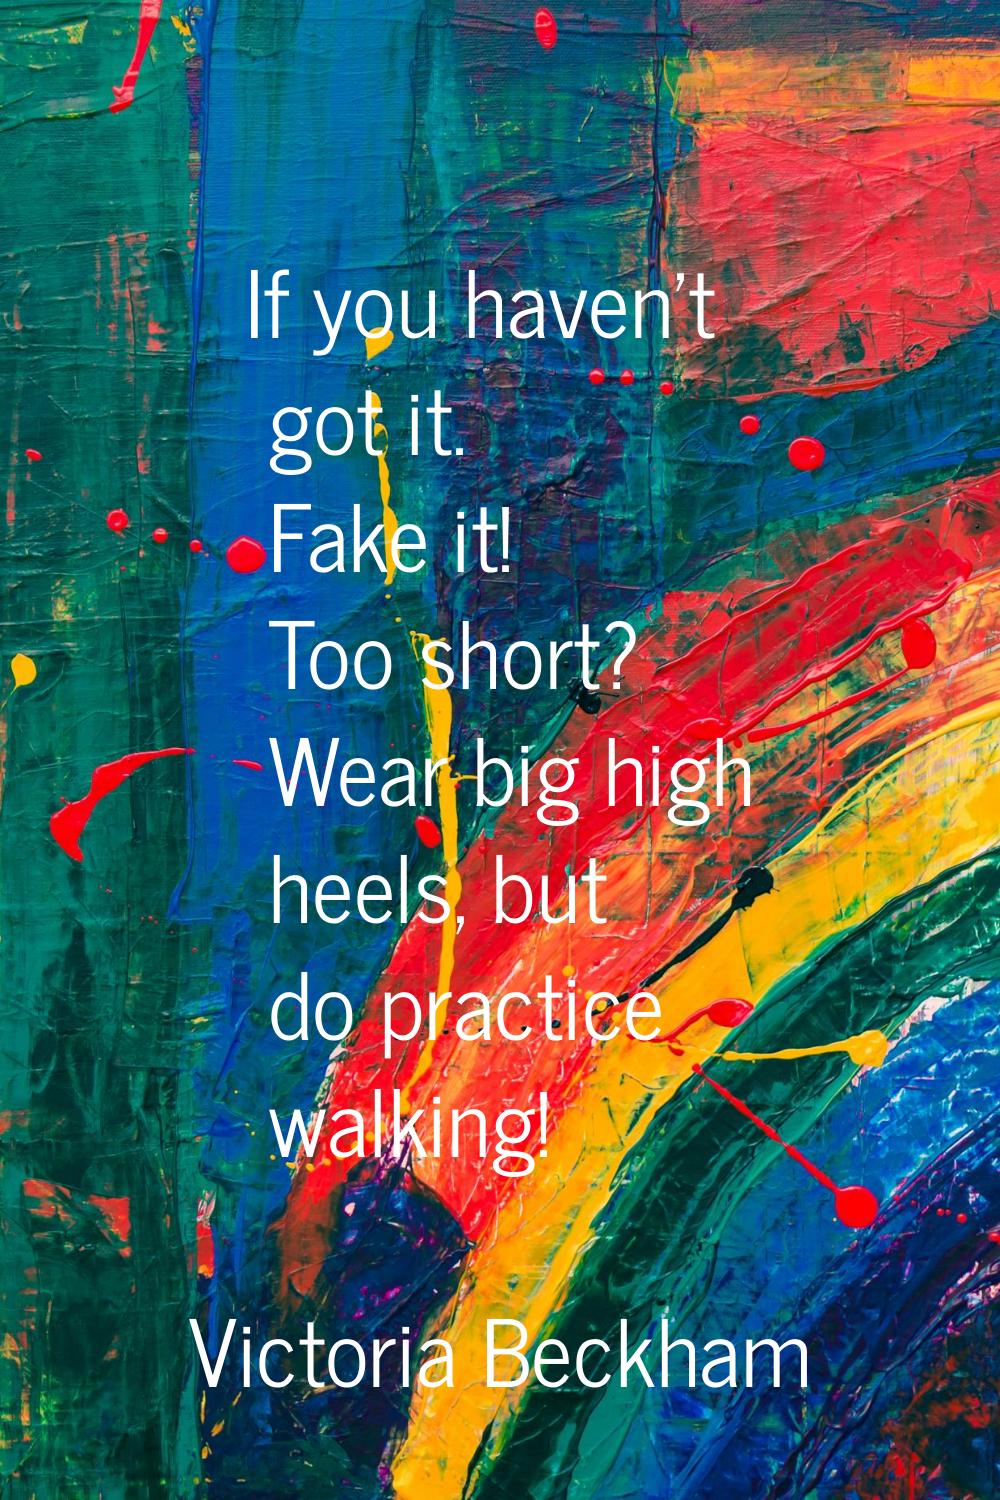 If you haven't got it. Fake it! Too short? Wear big high heels, but do practice walking!